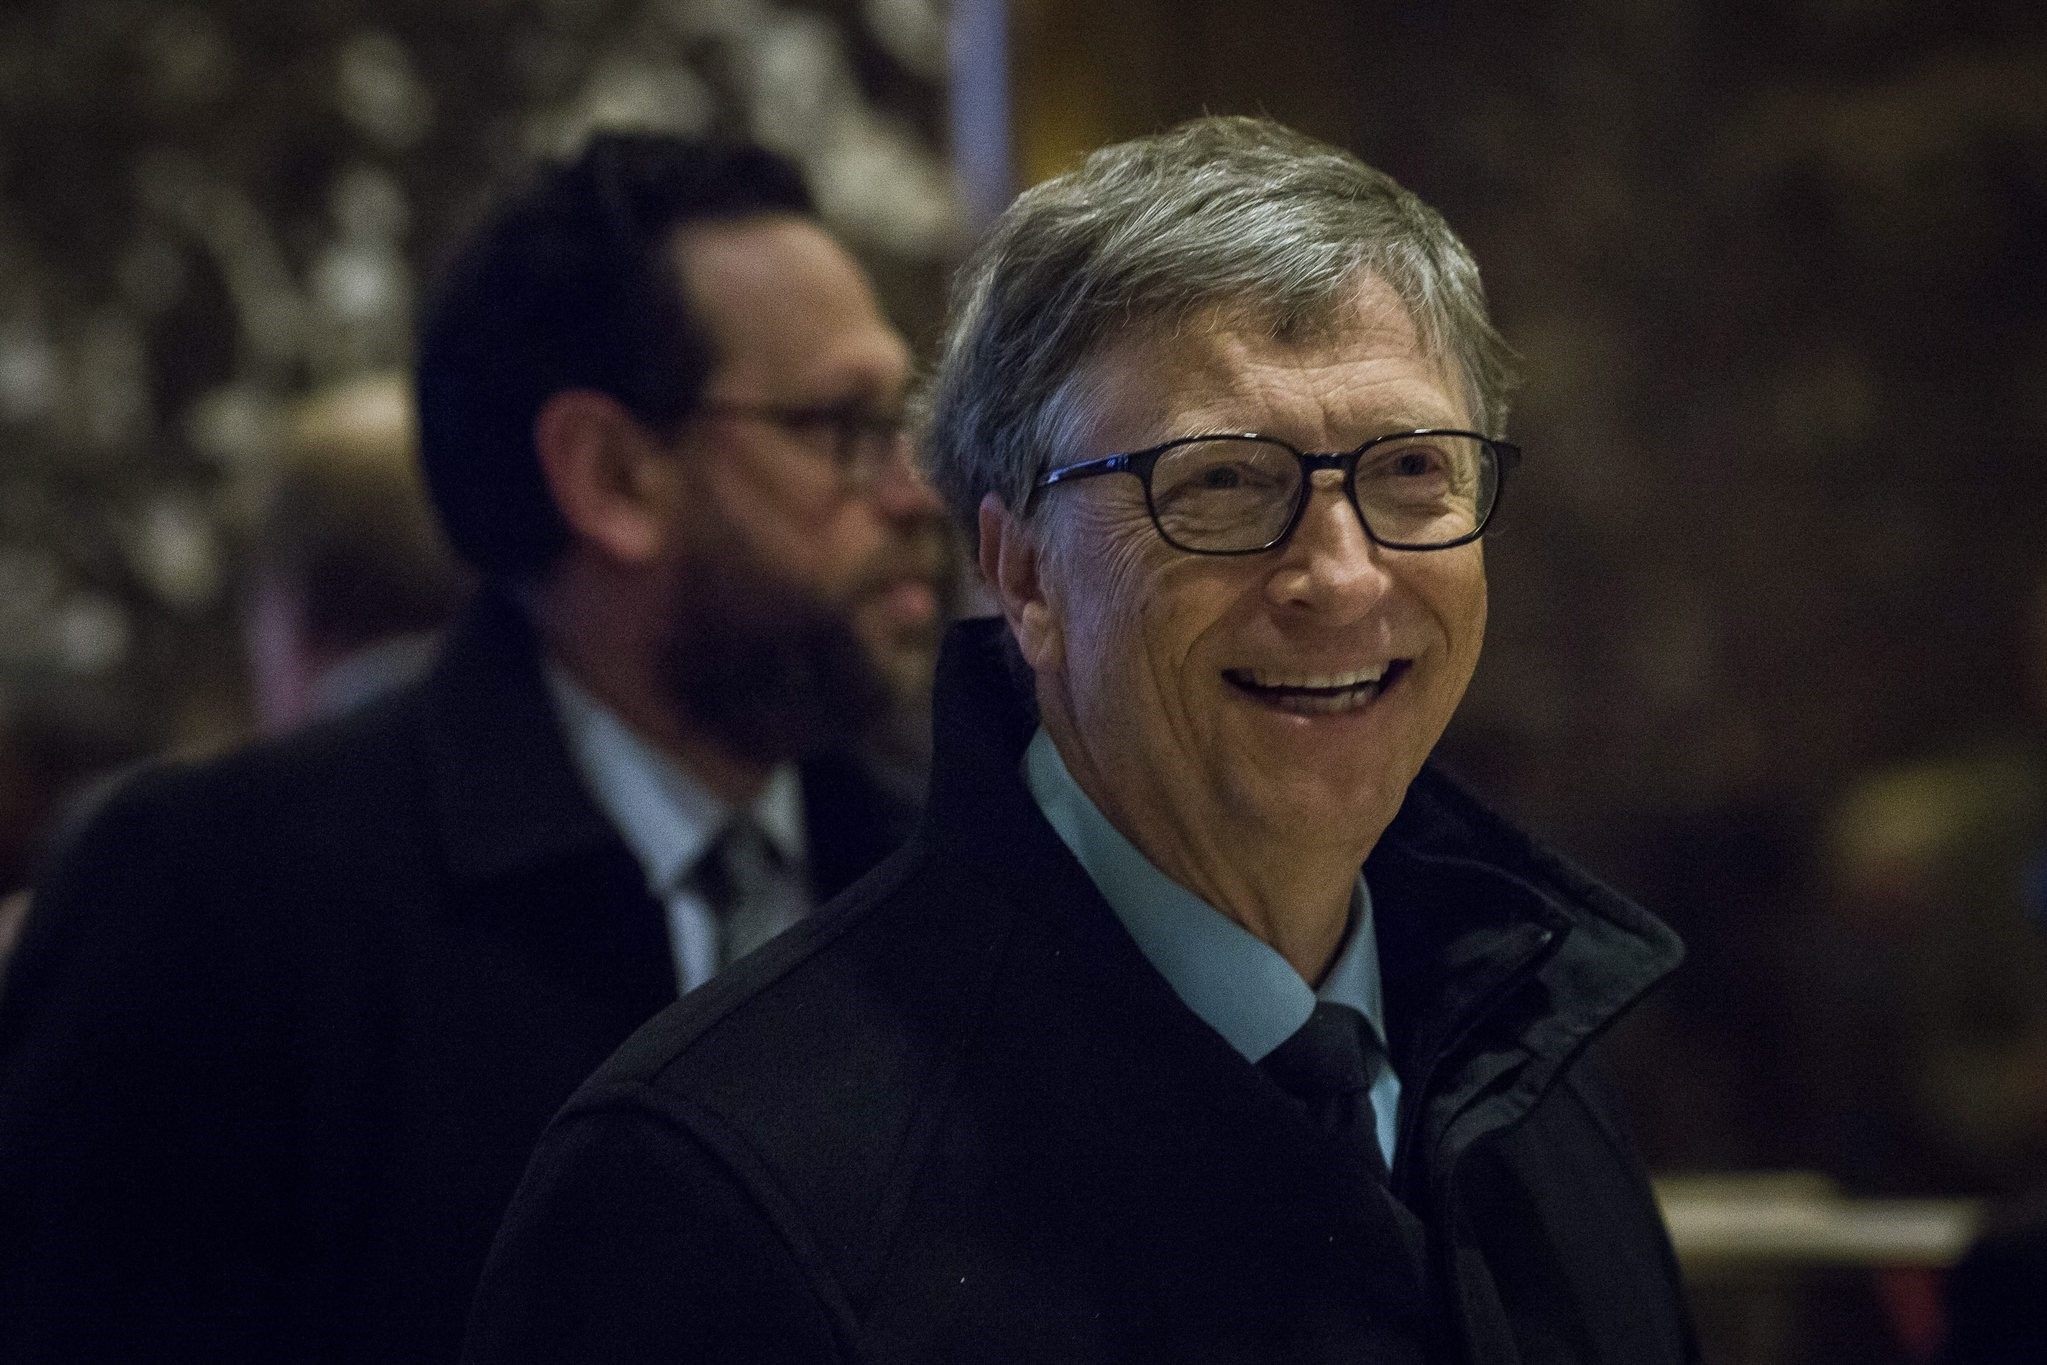 U.S. businessman Bill Gates arrives at Trump Tower in Manhattan, New York, 13 Dec 2016. (EPA Photo)